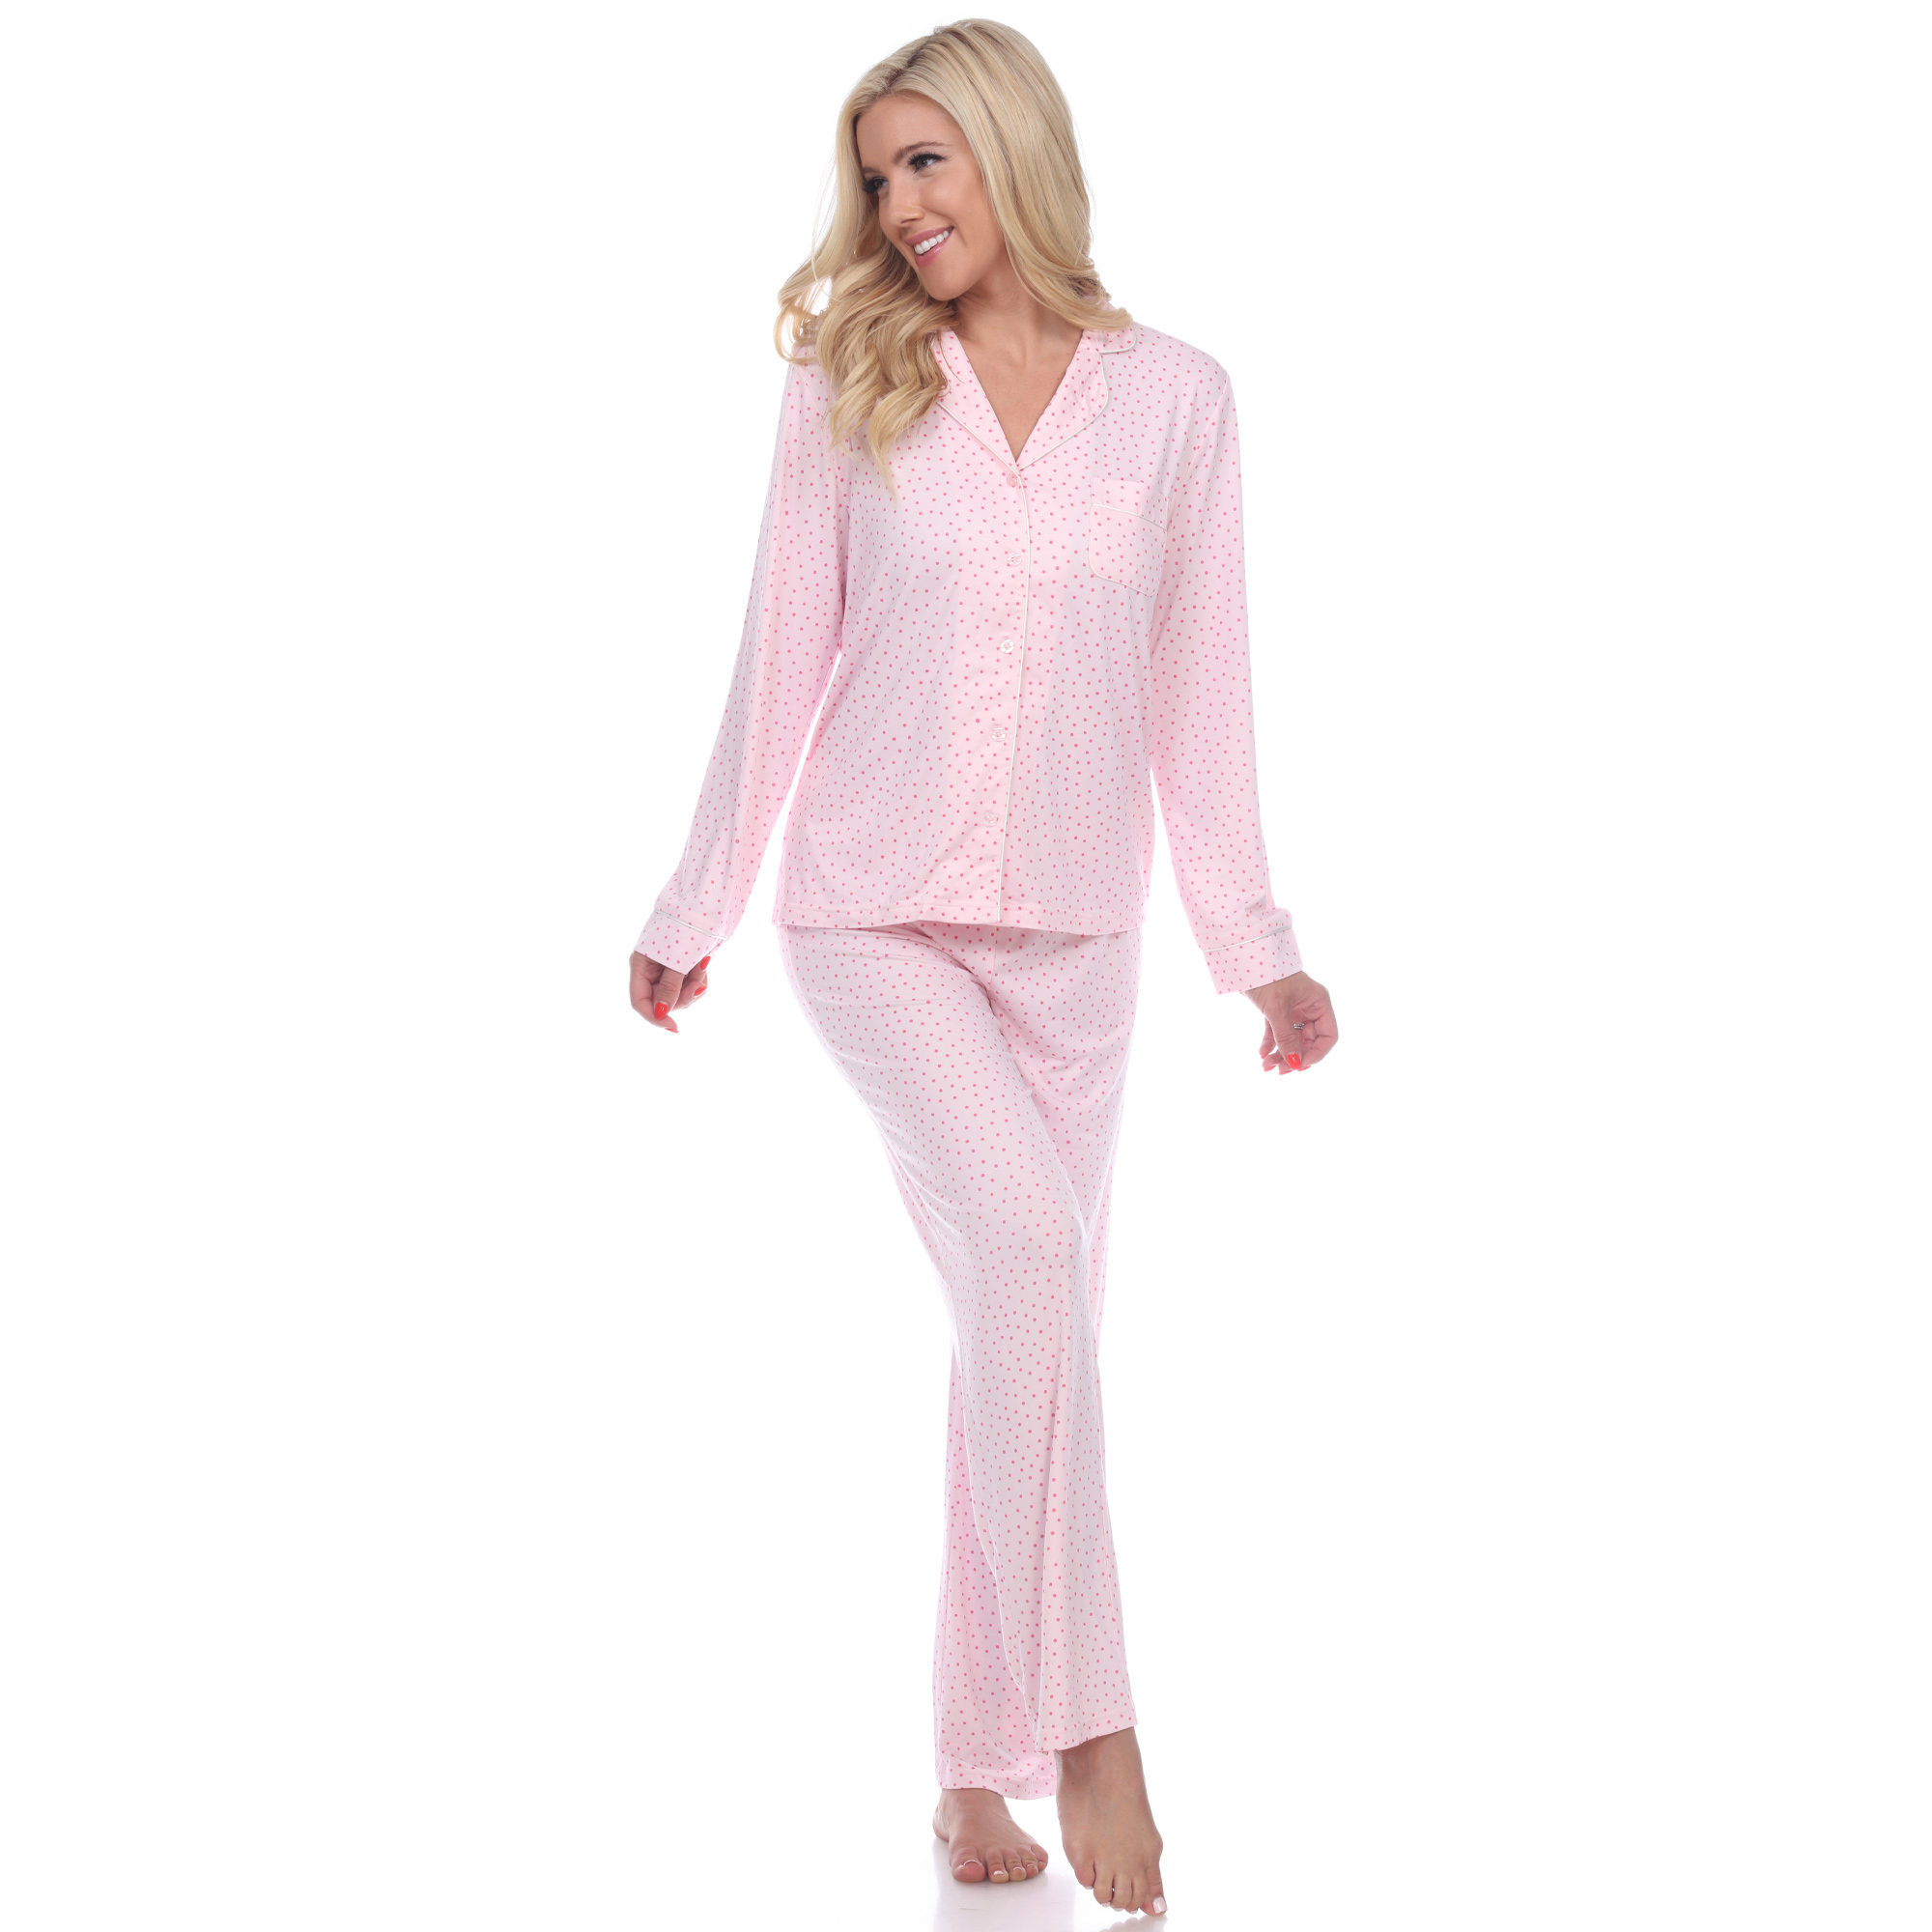 White Mark Women's Long Sleeve Dots Pajama Set - Pink, 3X